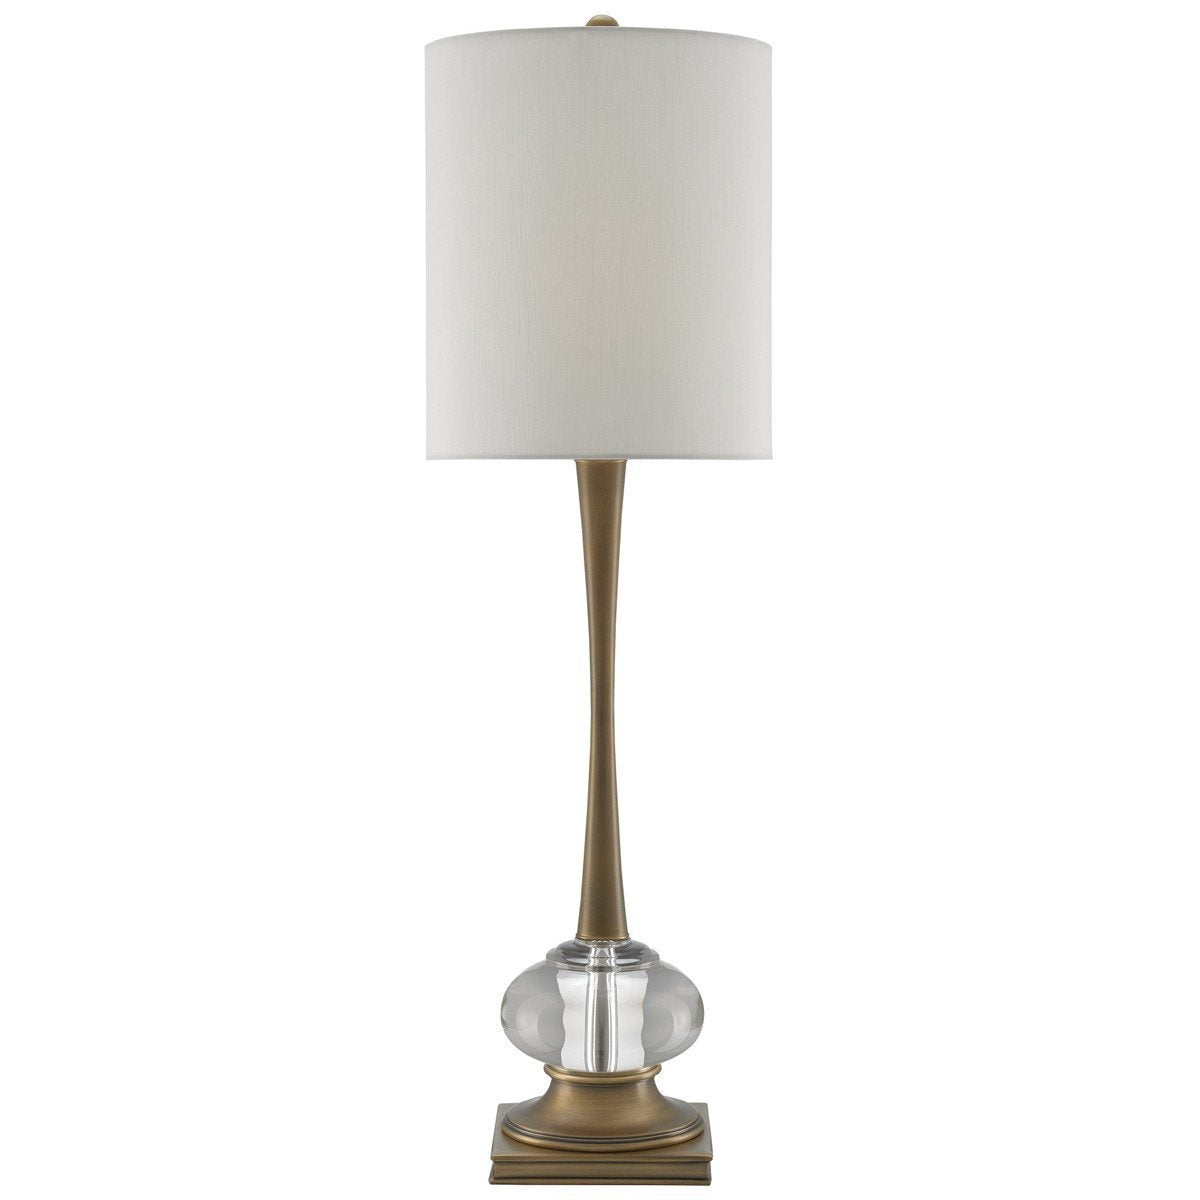 Currey and Company Giovanna Table Lamp